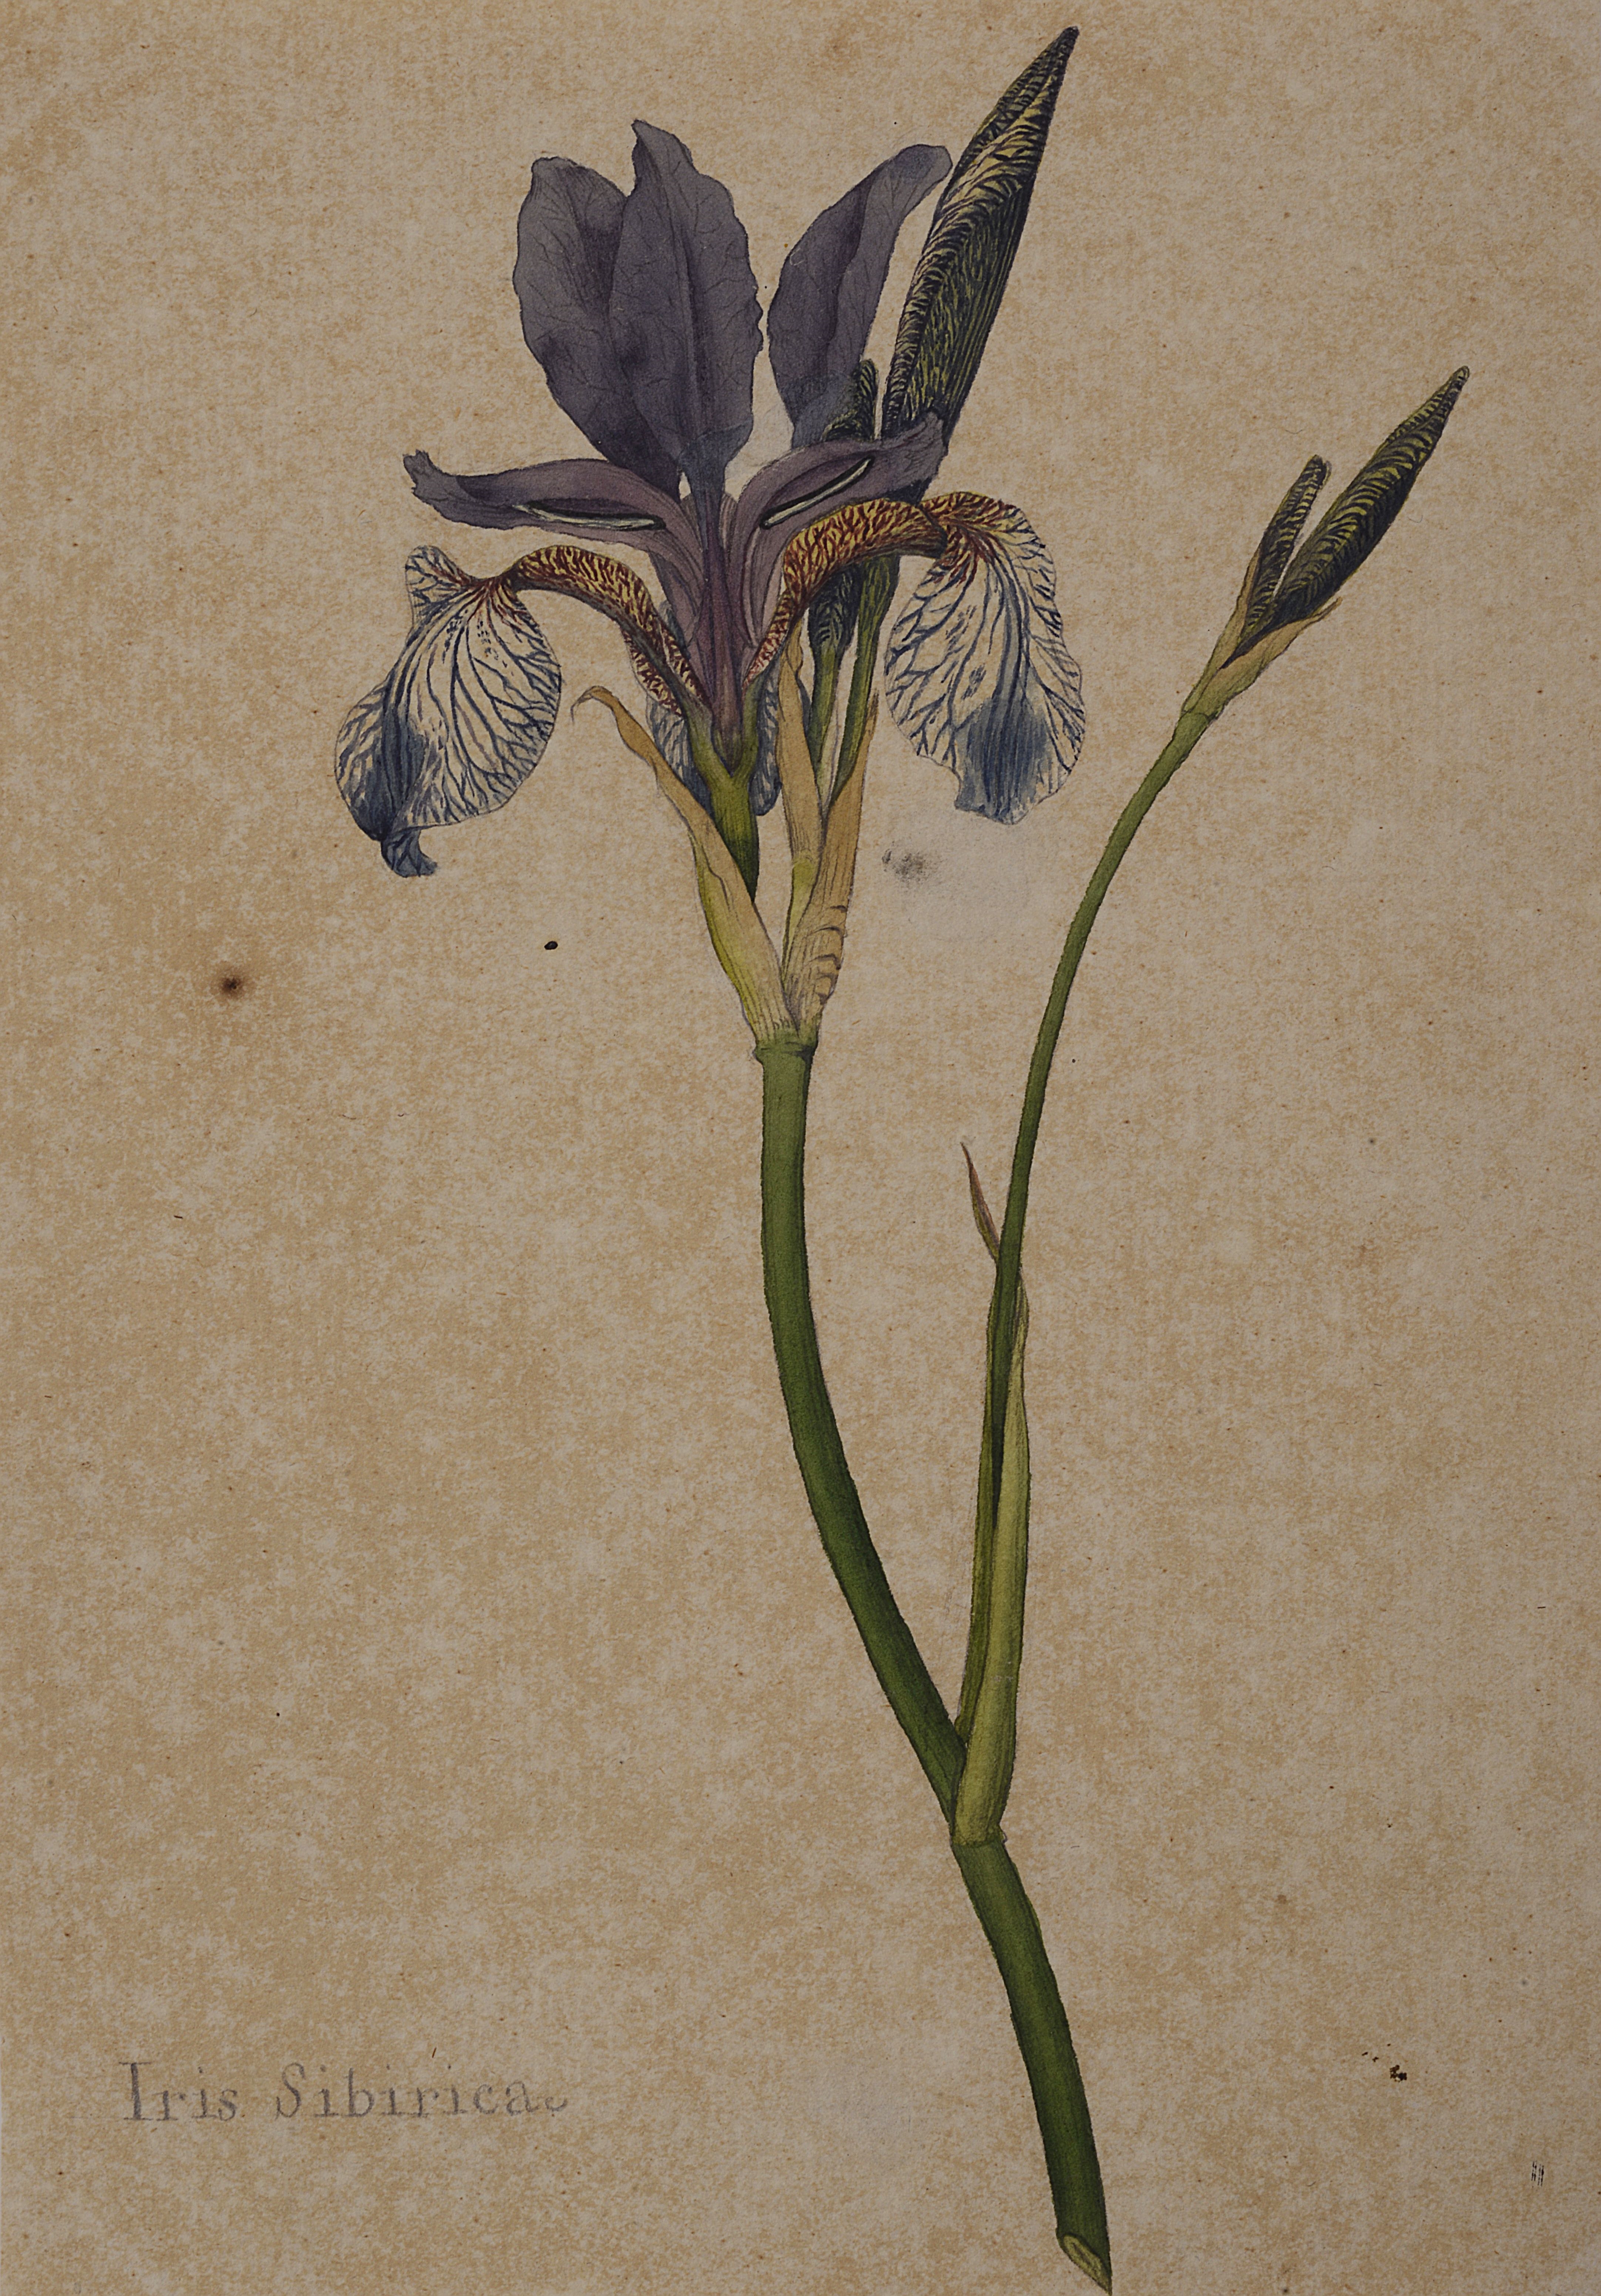 'Iris Sibirica' (Siberian Iris)